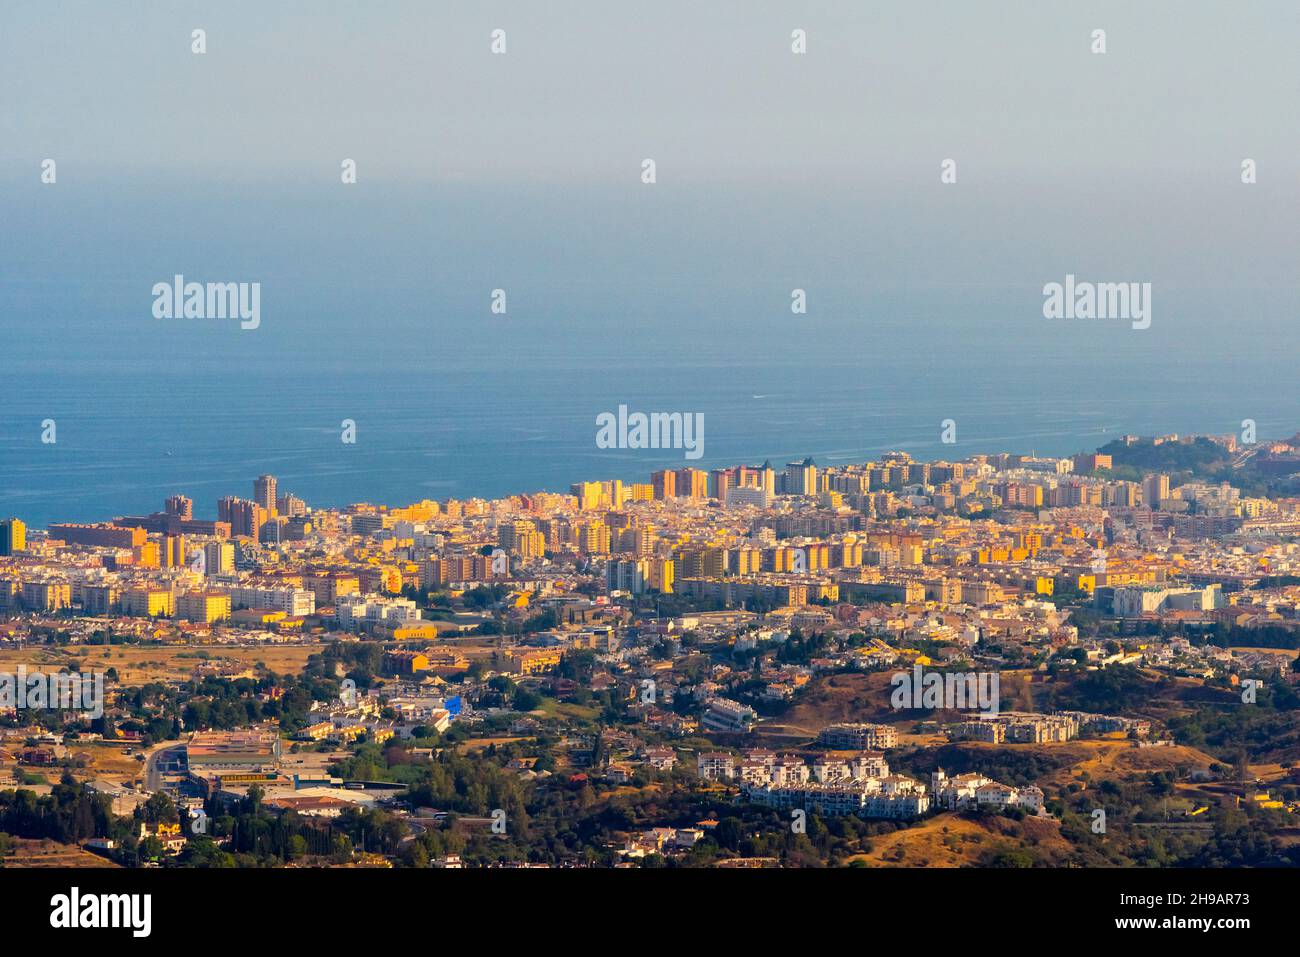 City along the coast line viewed from Mijas, Mijas, Malaga Province, Andalusia Autonomous Community, Spain Stock Photo